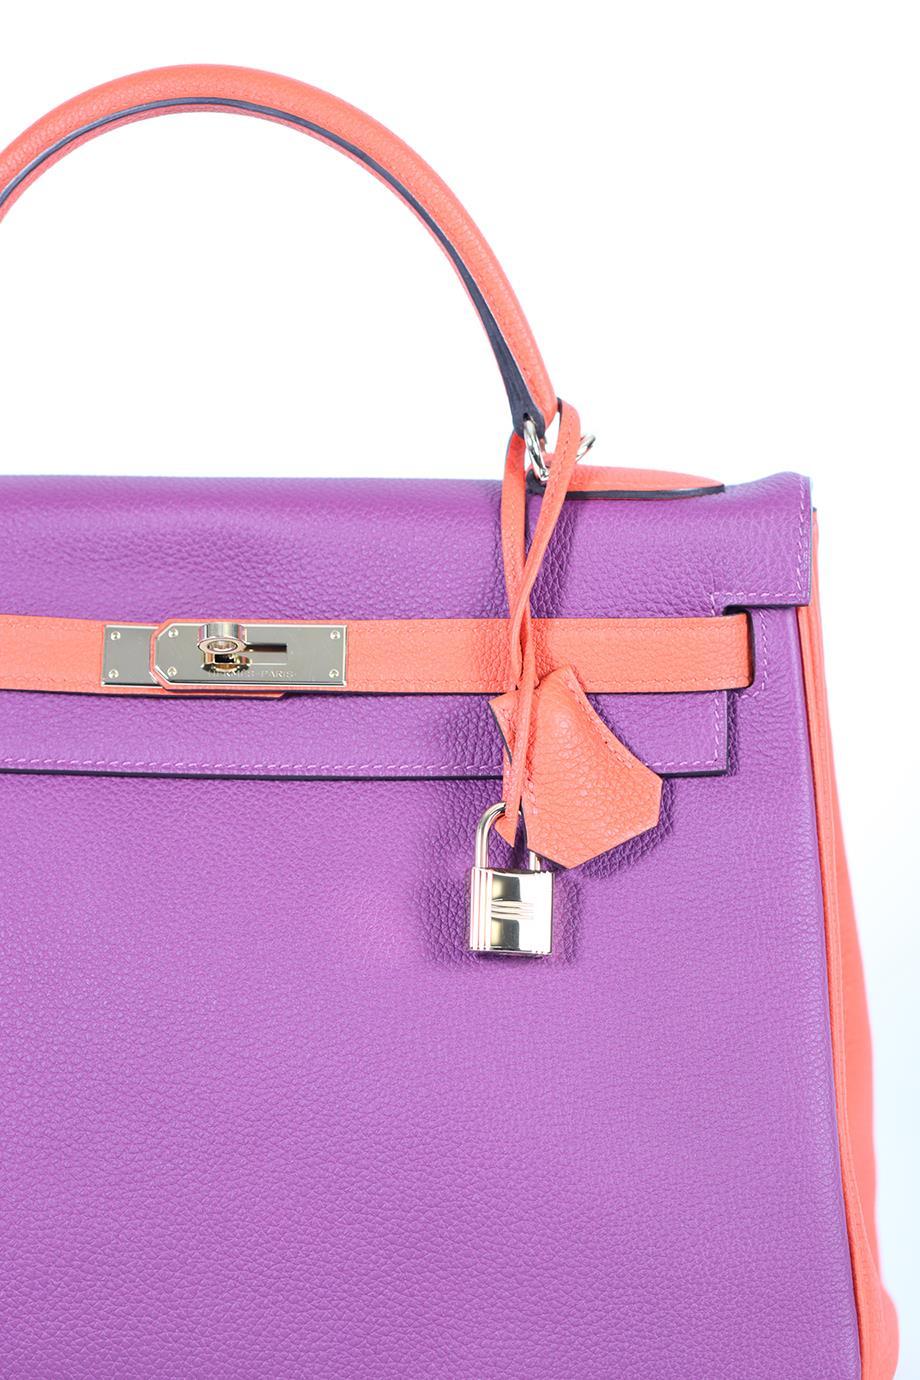 <ul>
<li>Hermès 2019 Hss Kelly 32Cm Togo Leather Bag.</li>
<li>Purple and Red.</li>
<li>Hook and eye fastening - Front.</li>
<li>Comes with - dustbag.</li>
<li><strong>Model: Kelly 32.</strong></li>
<li><strong>32